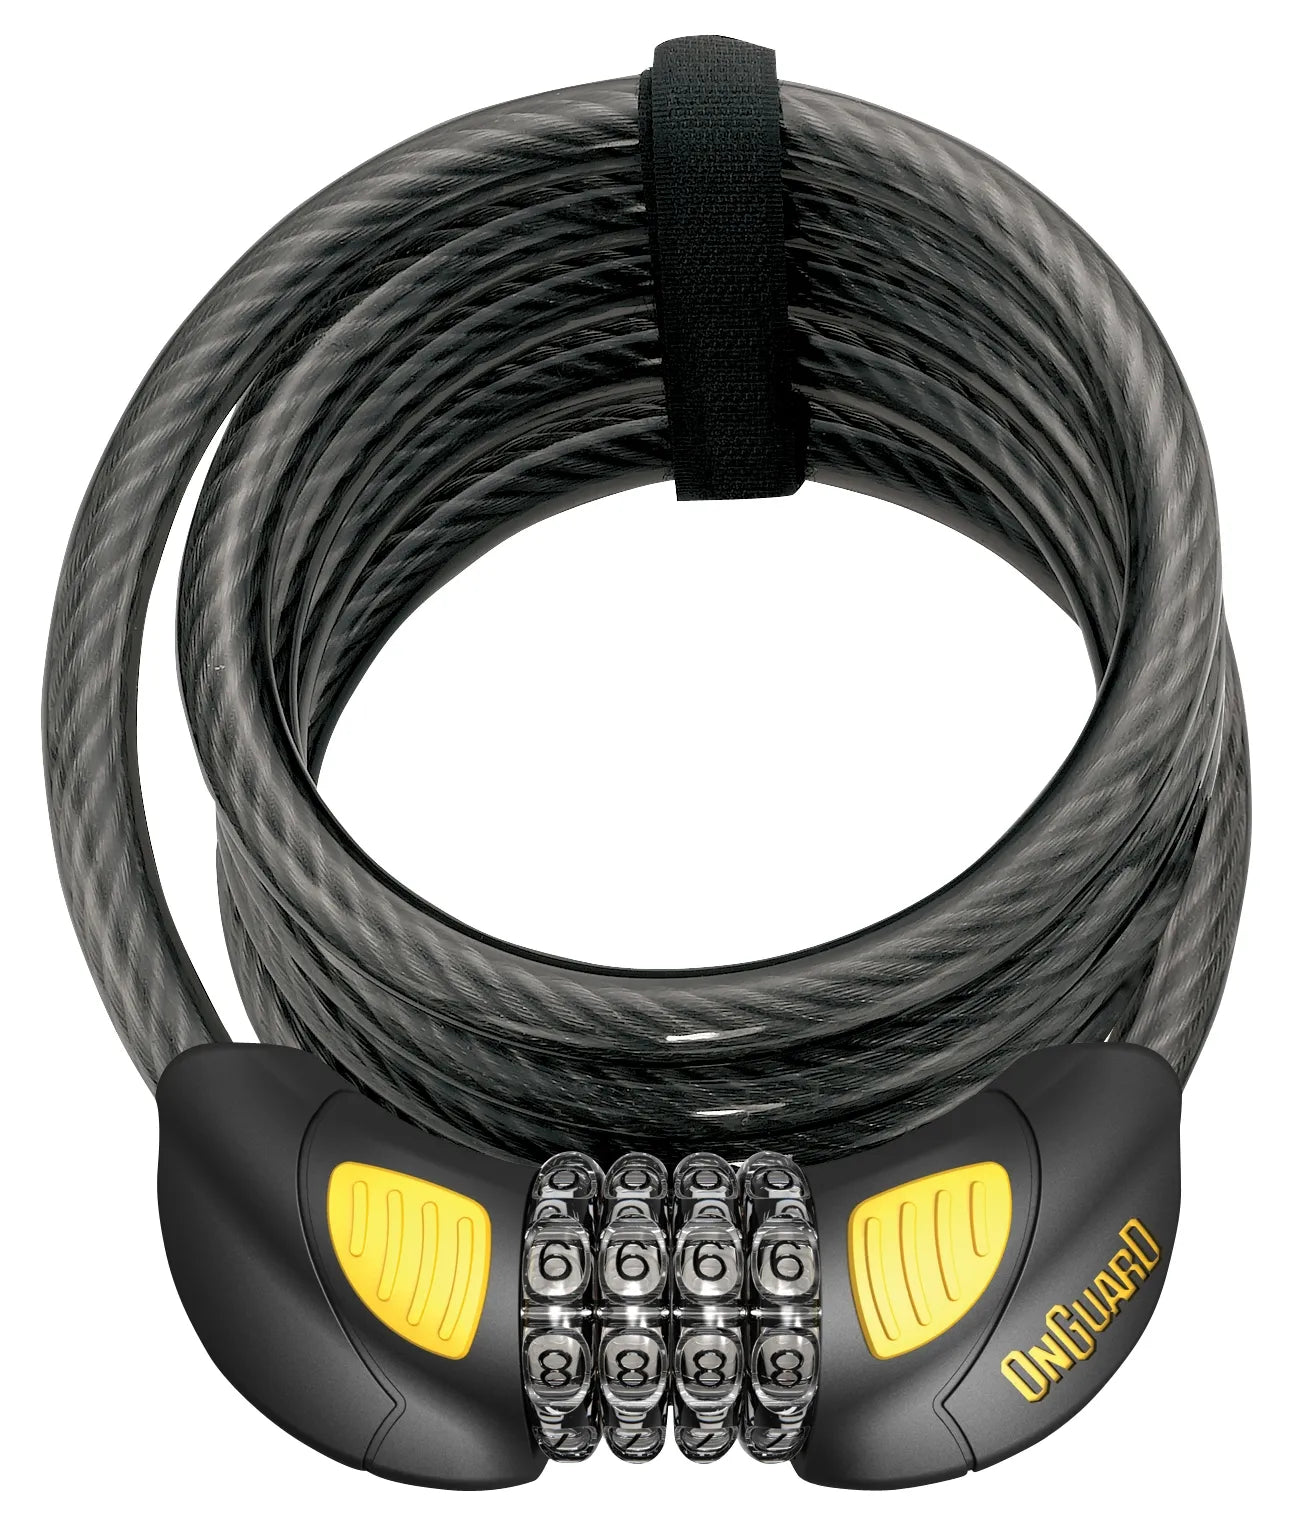 Candado Doberman 8031 GLO  Cable C/Clave/Luz 185x12mm